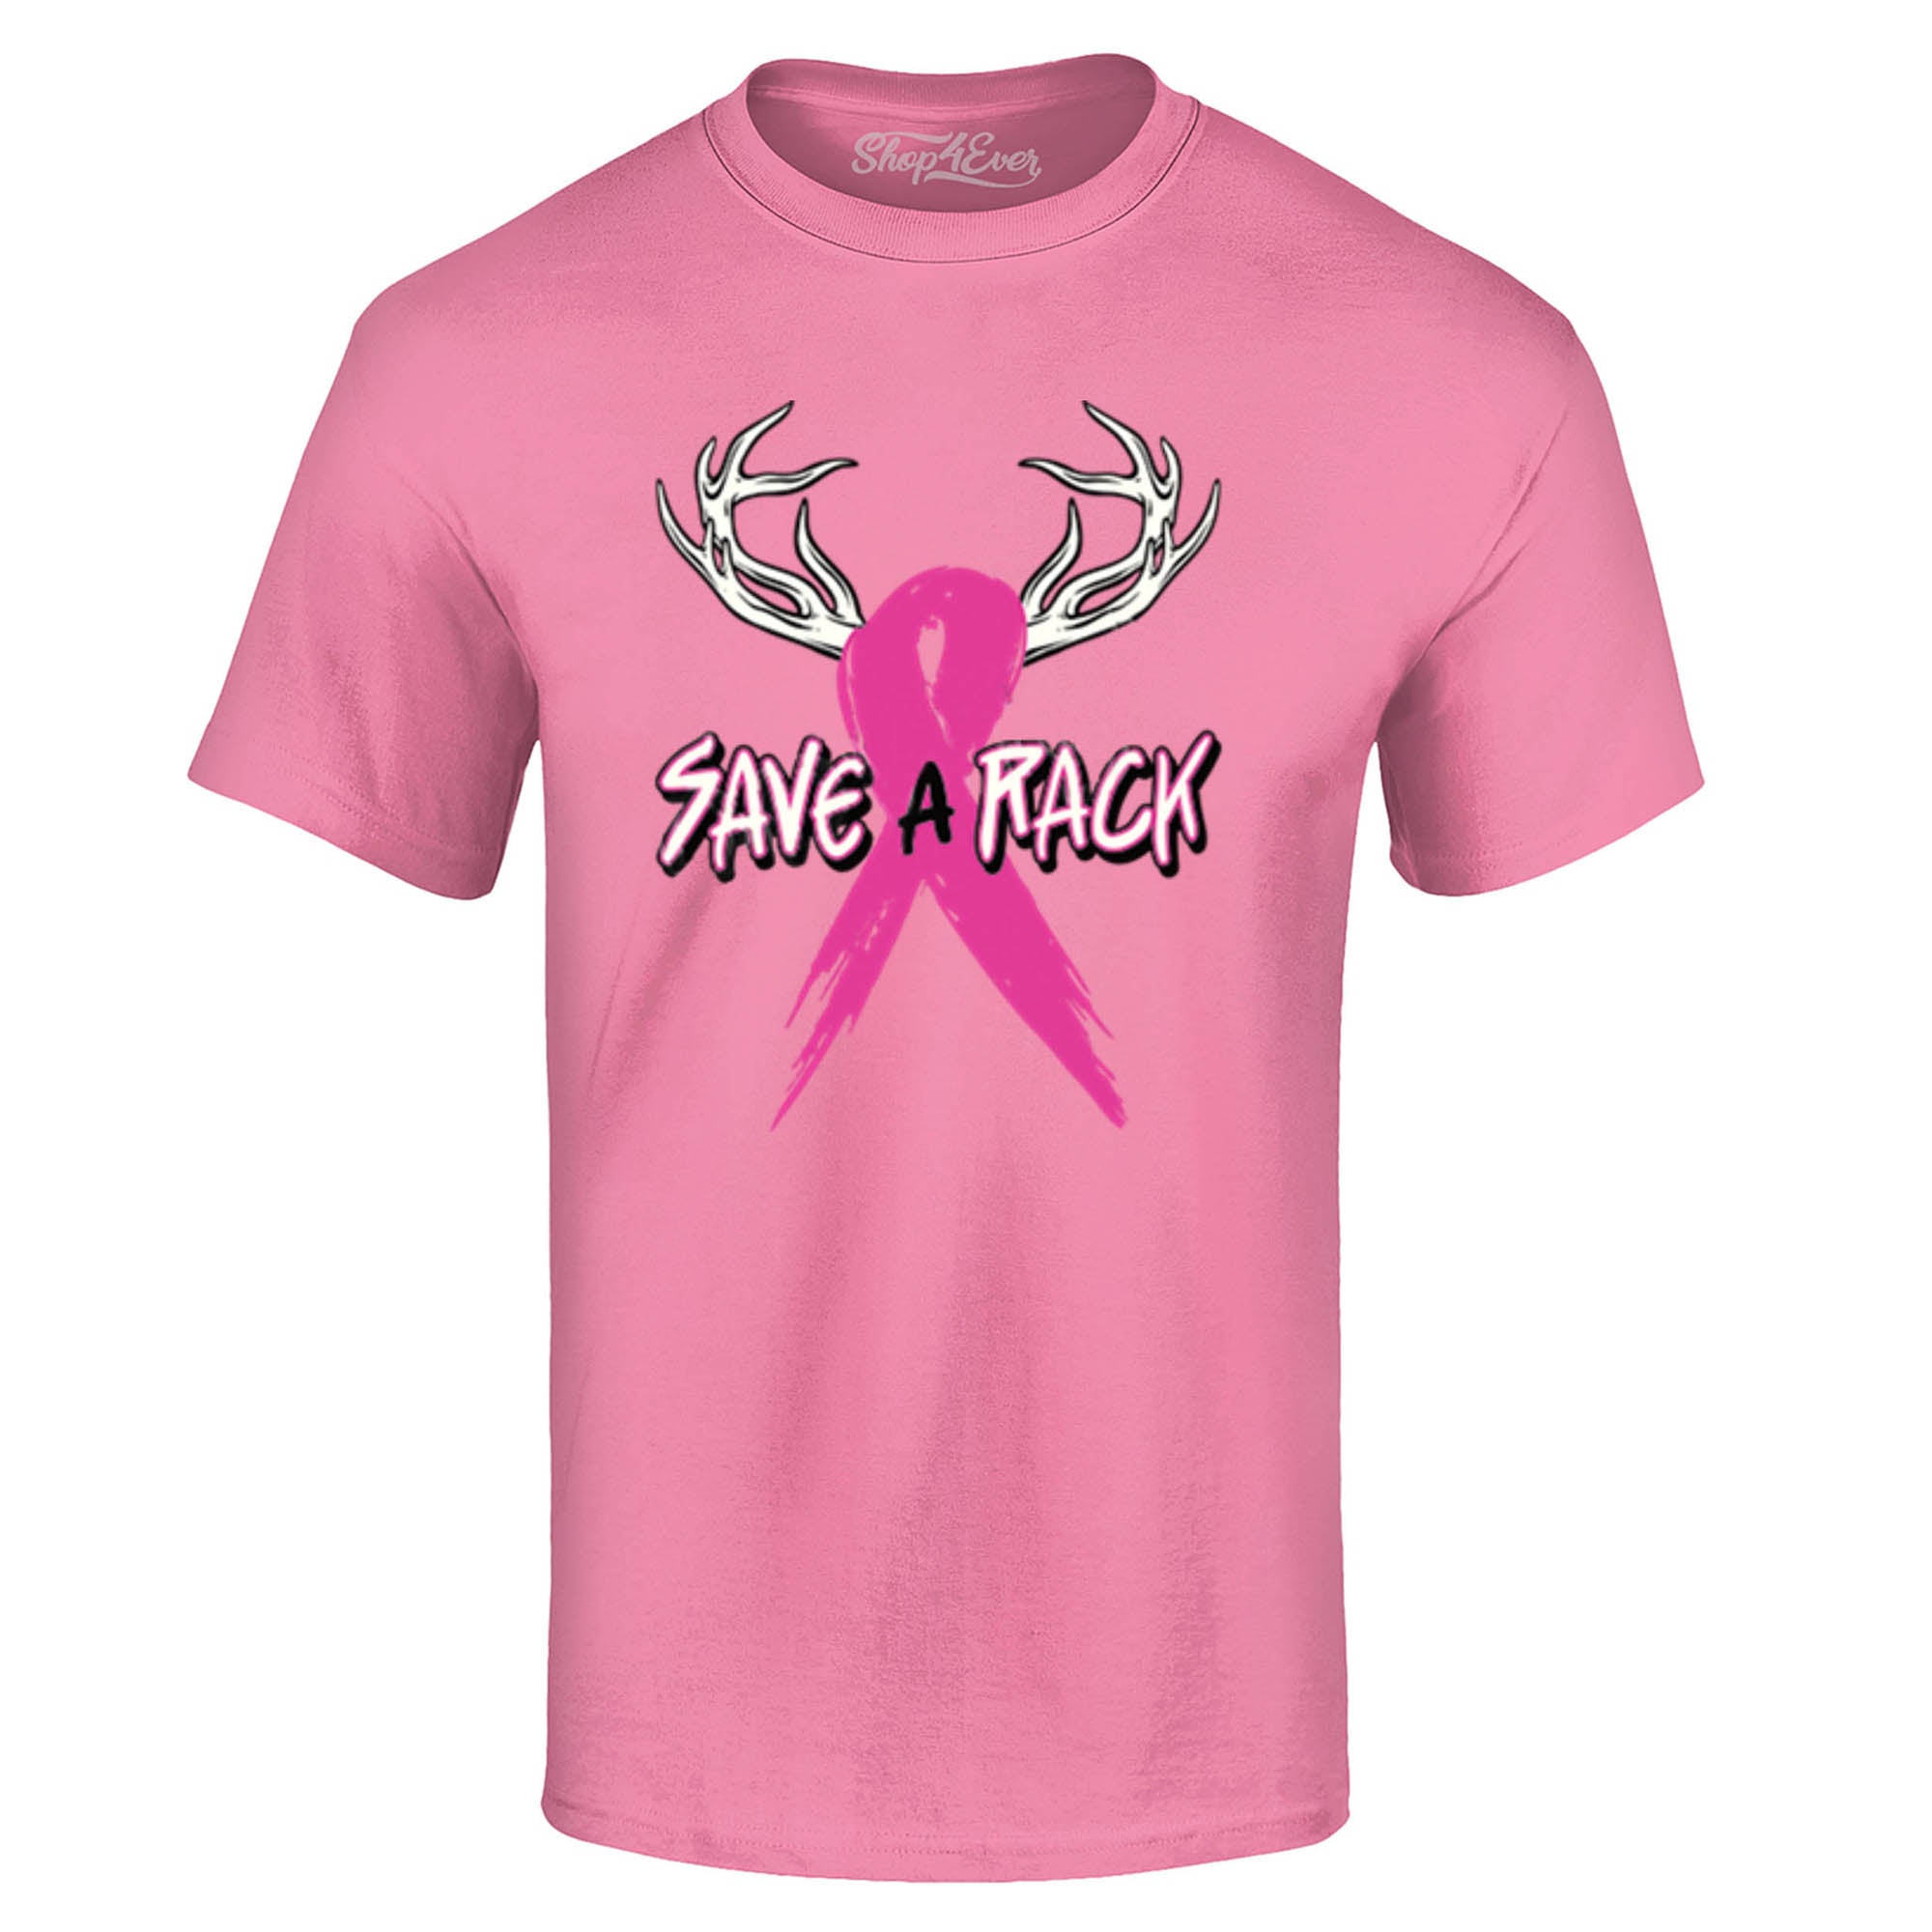 Save A Rack Pink Ribbon T-Shirt Breast Cancer Awareness Tee